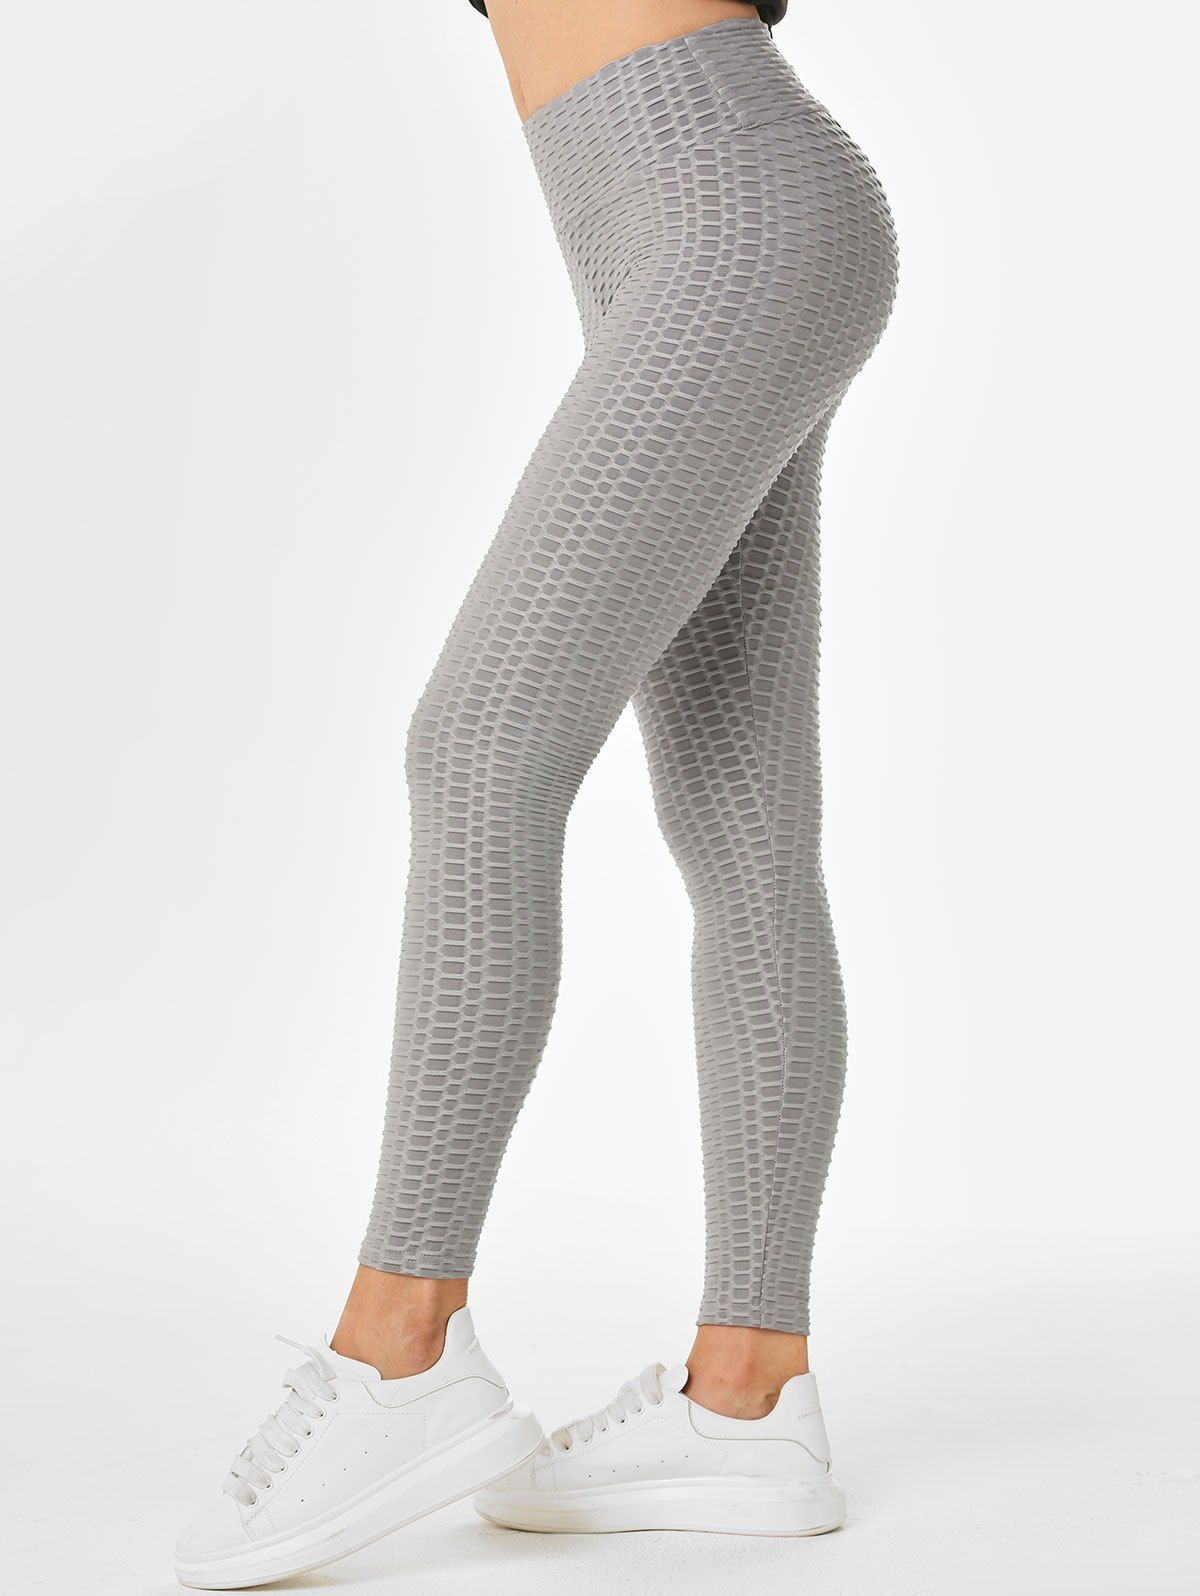 Anti Cellulite Scrunch Bum Yoga Leggings - GRAY XL